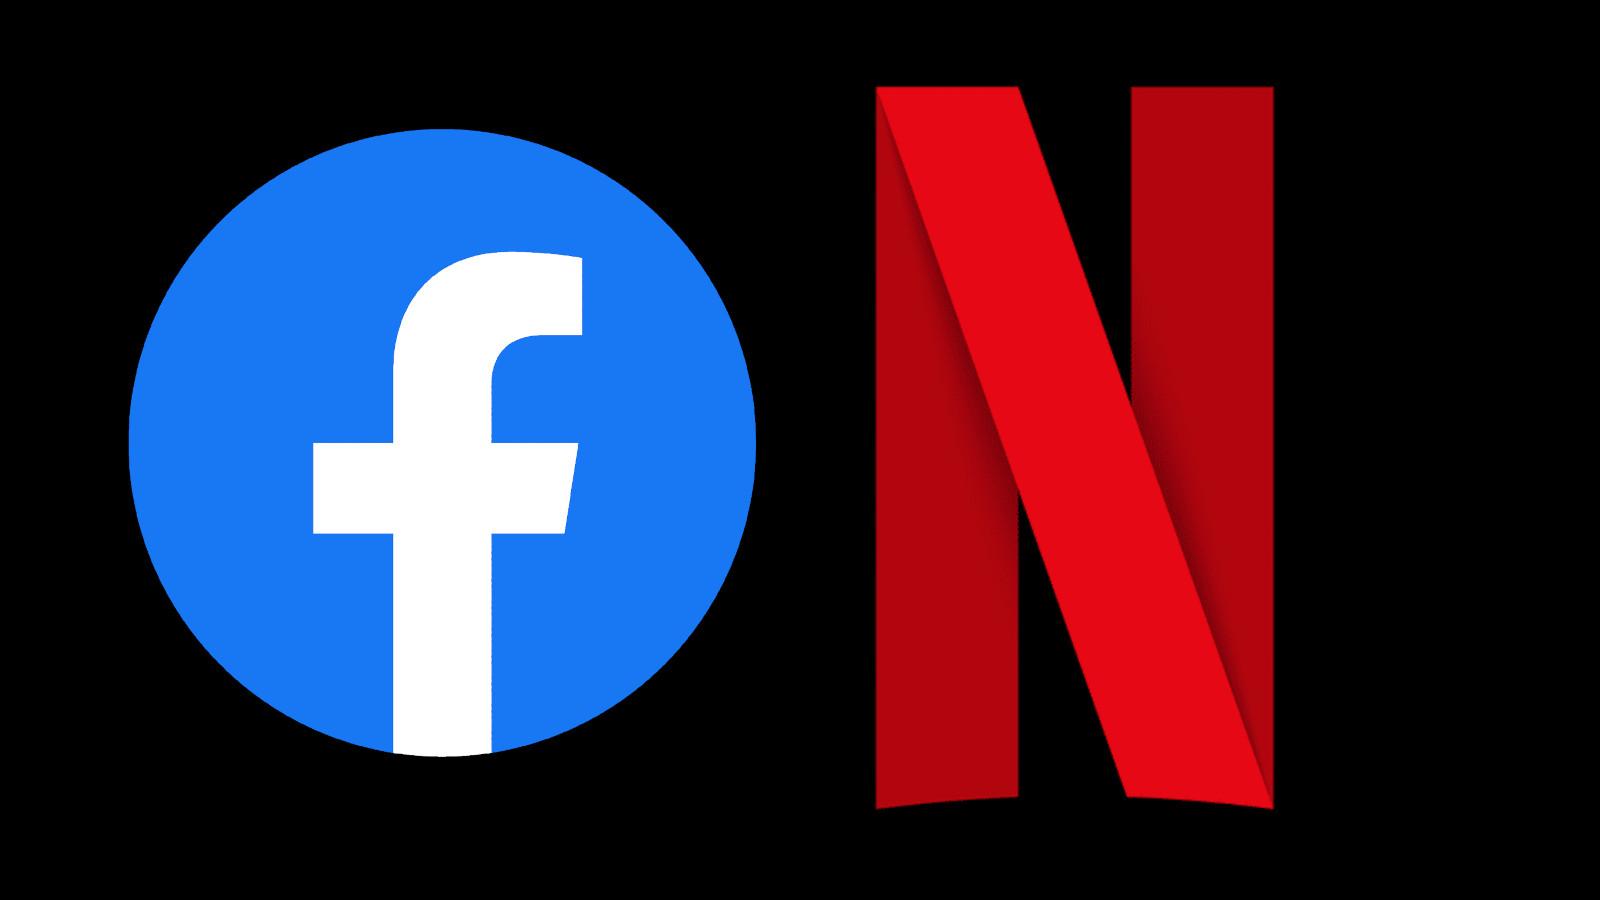 Facebook and Netflix logo